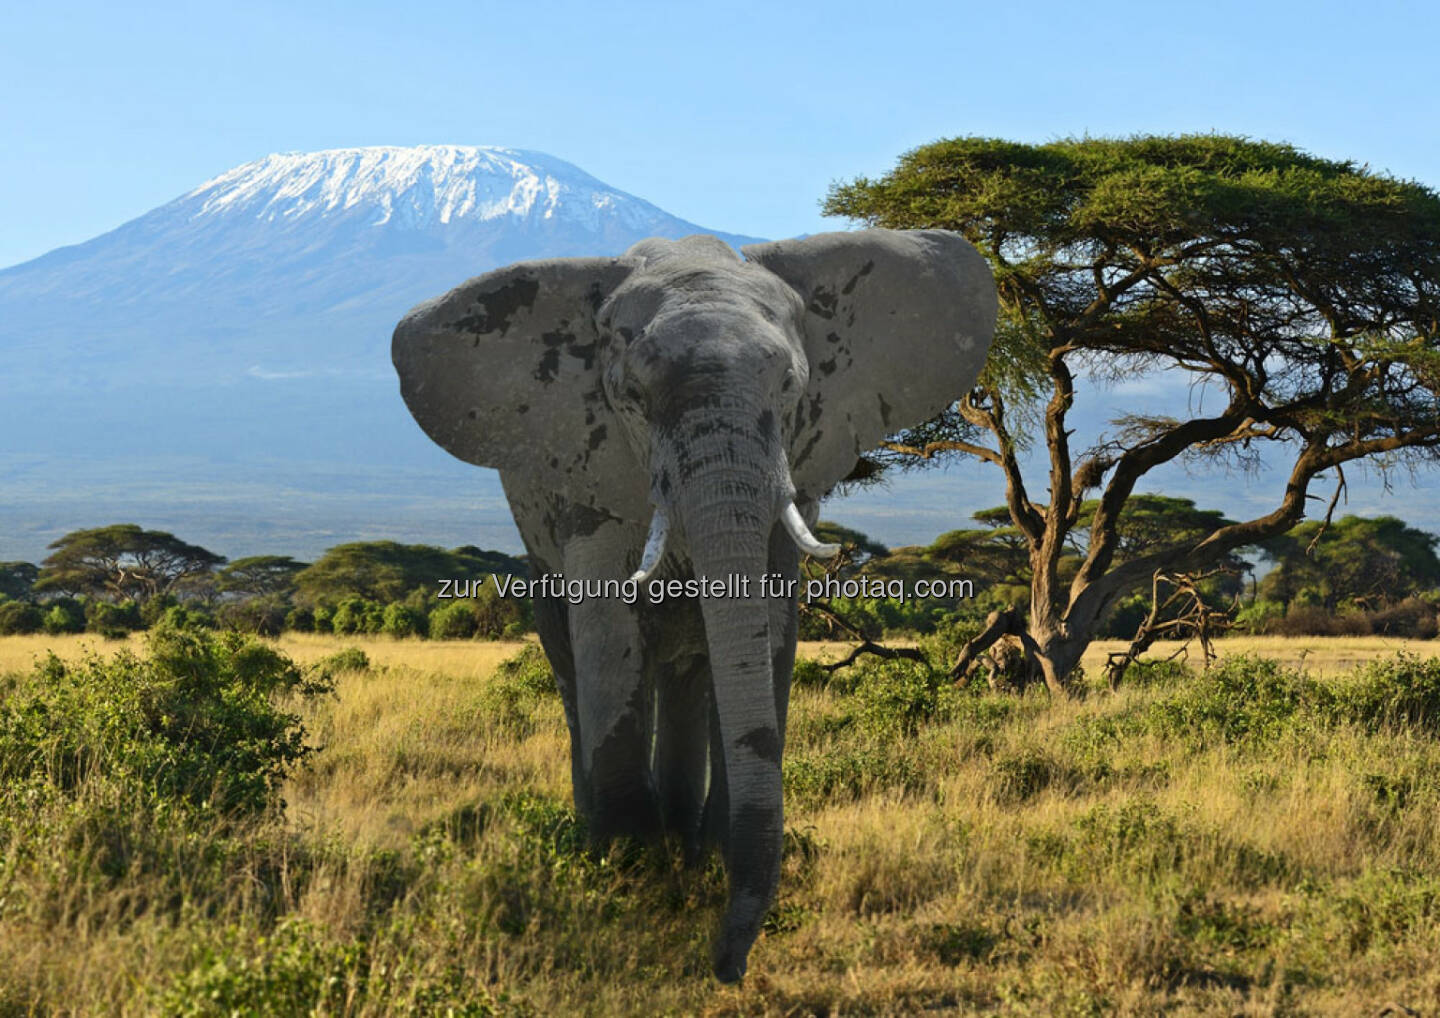 Kilimanjaro, Kenia, Afrika, Elefant, Berg, Steppe, http://www.shutterstock.com/de/pic-200161715/stock-photo-kilimanjaro-elephants-in-amboseli-national-park-kenya.html